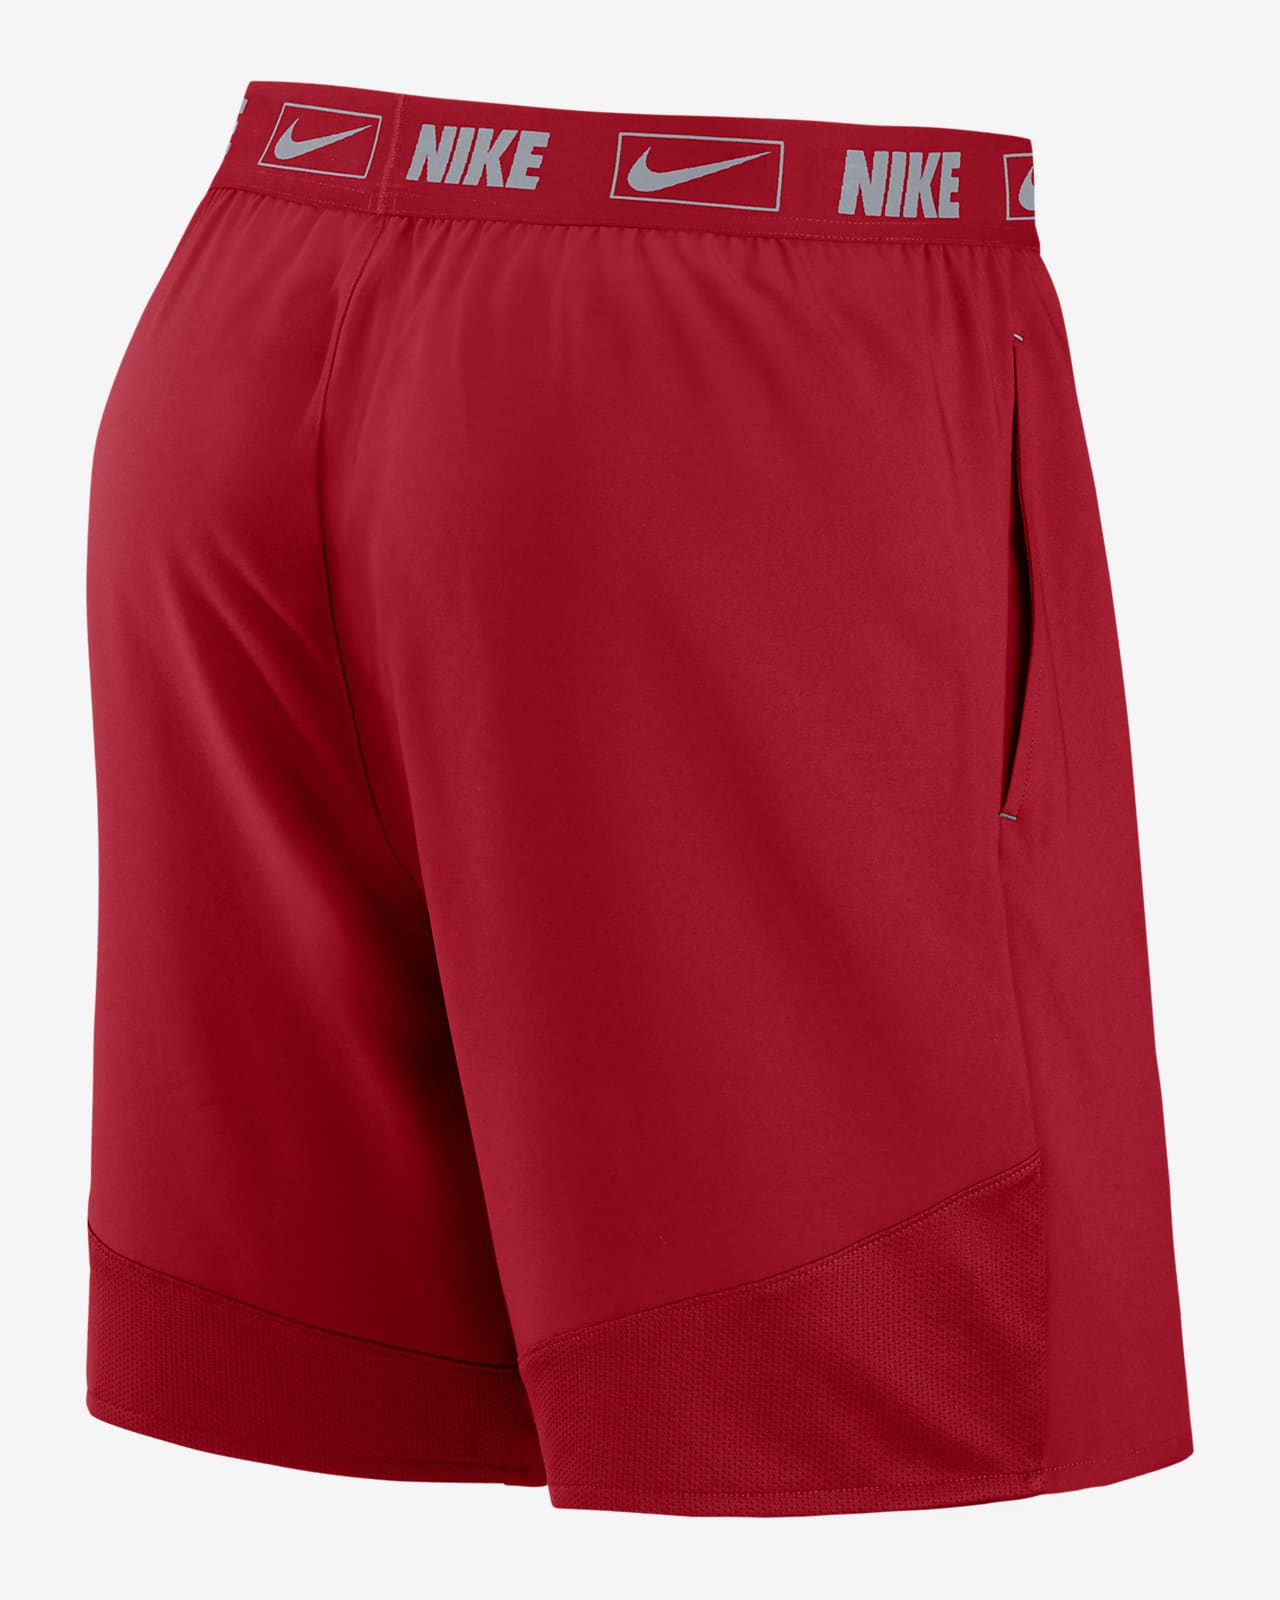 Nike Men's New York Mets Royal Bold Express Shorts